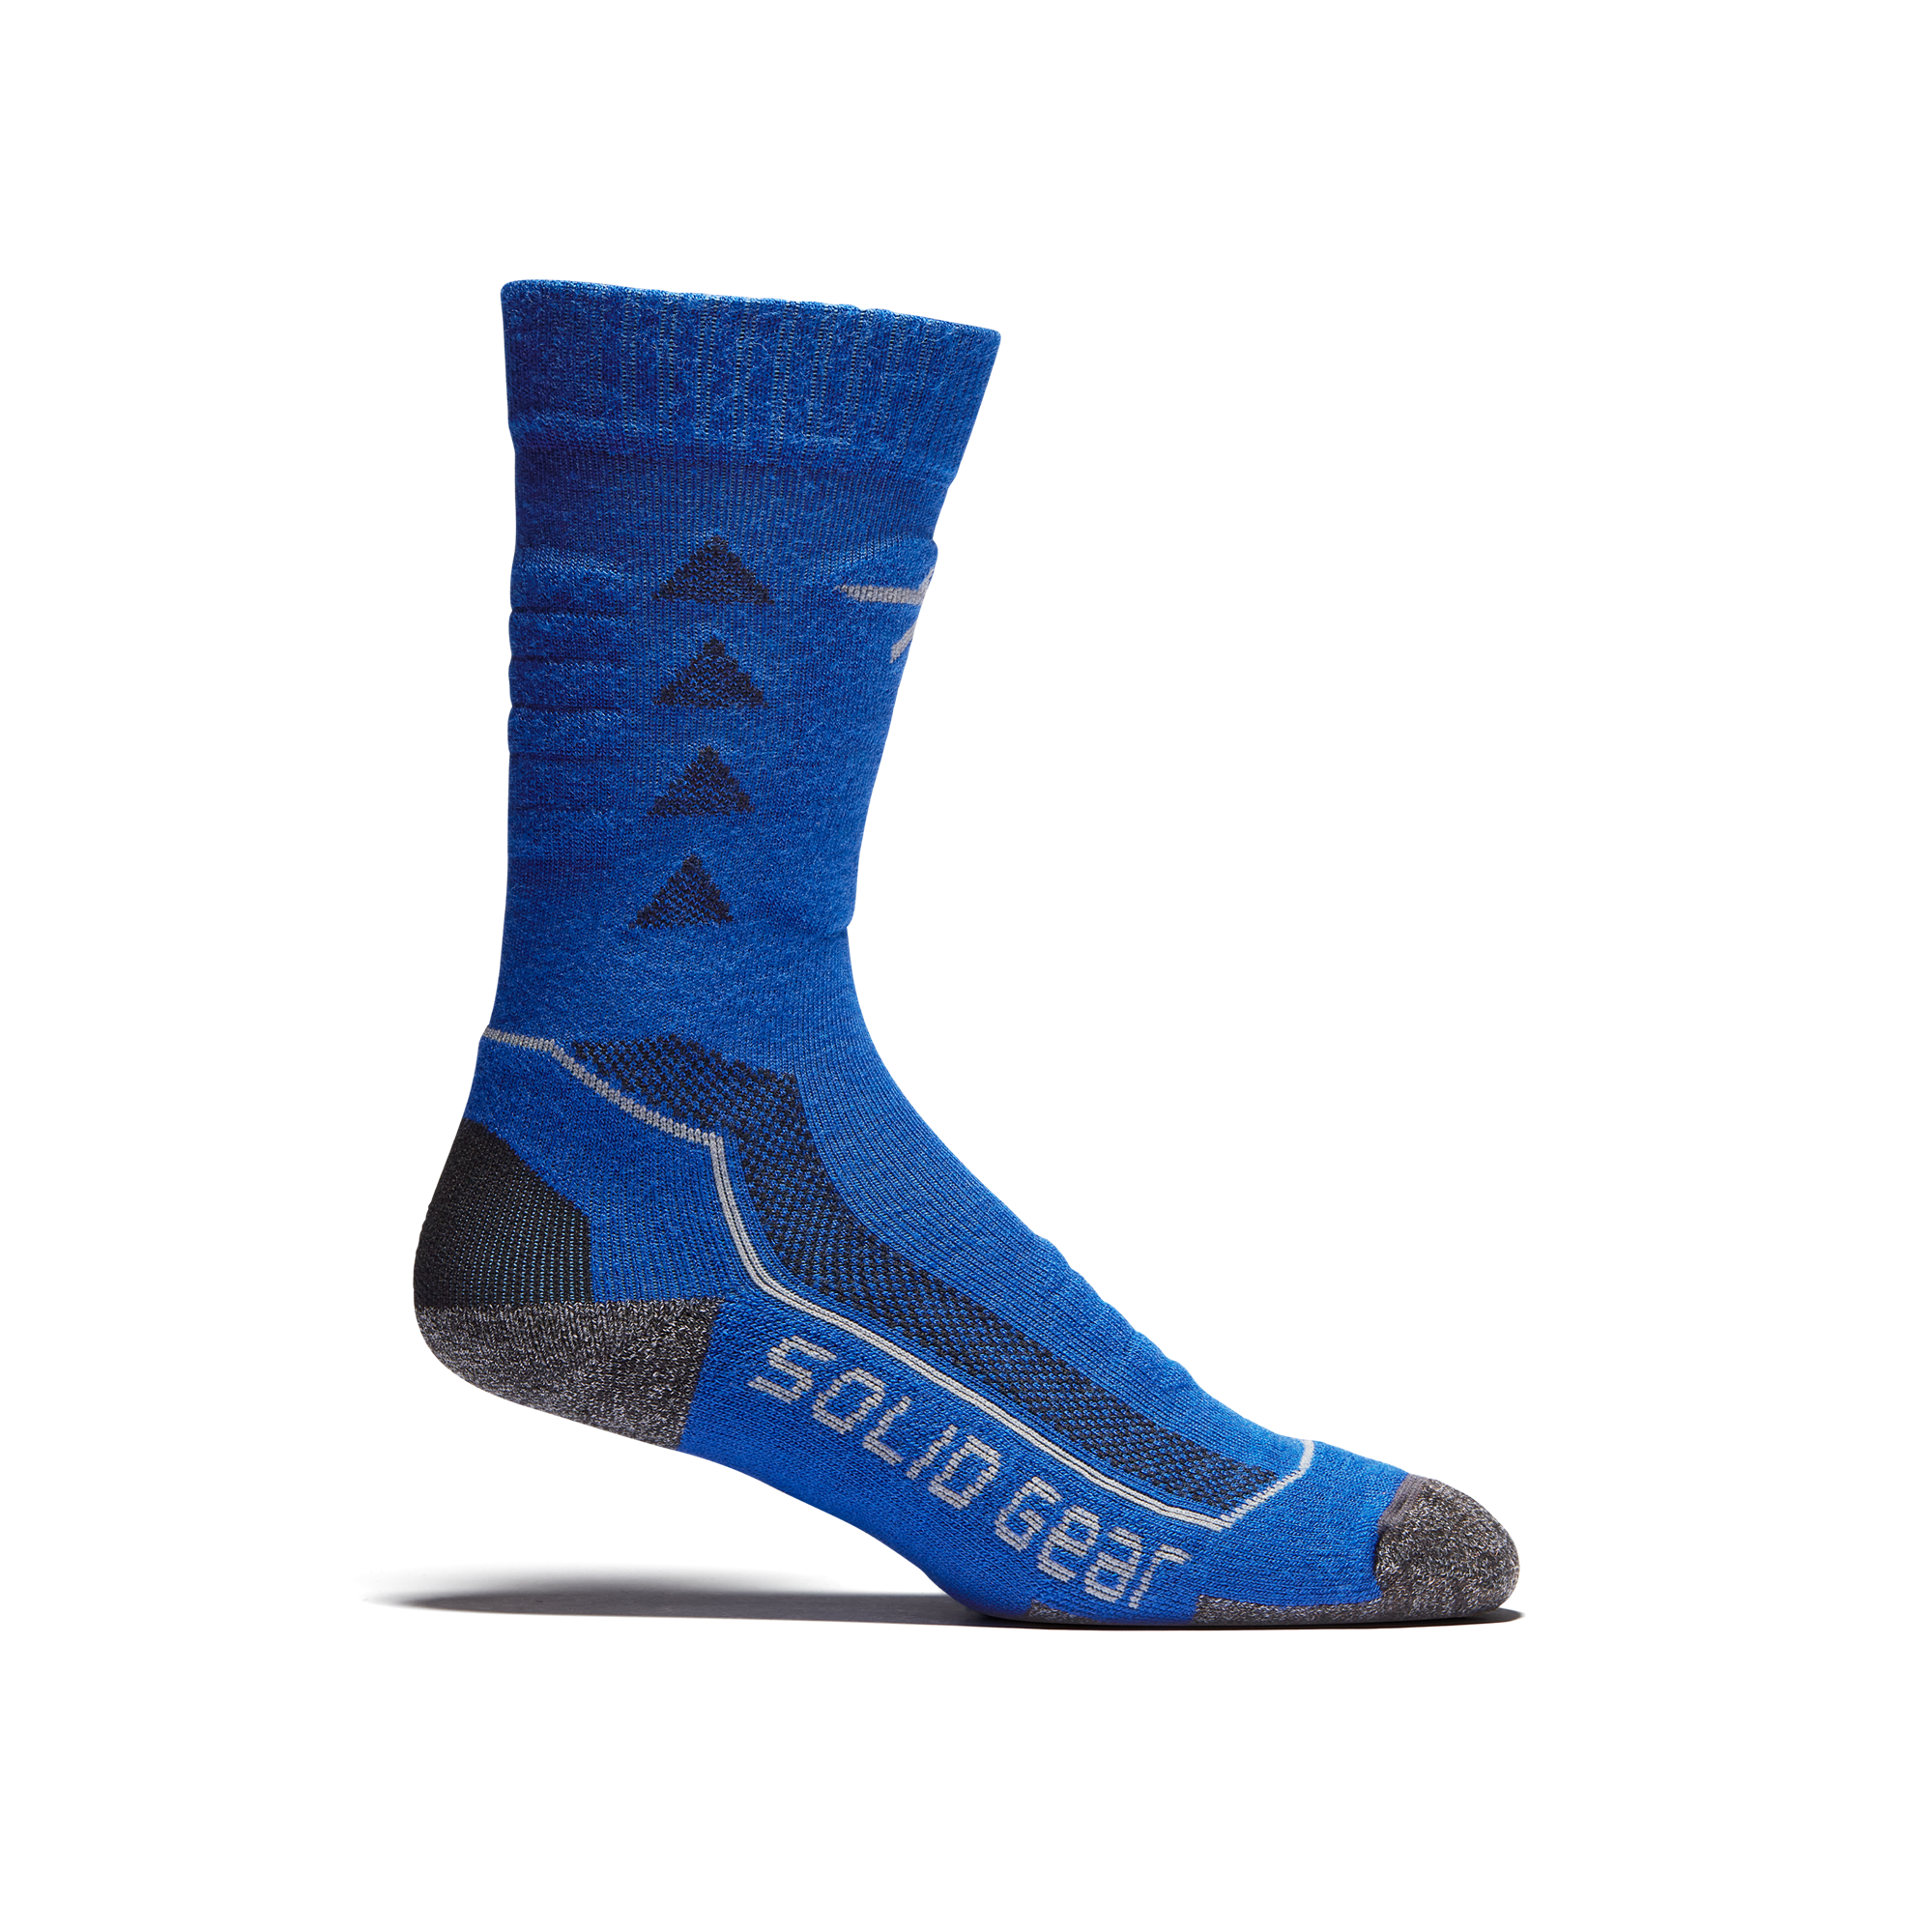 Solid - Extreme Performance Winter sokker, Blå/Sort - 30006 - -